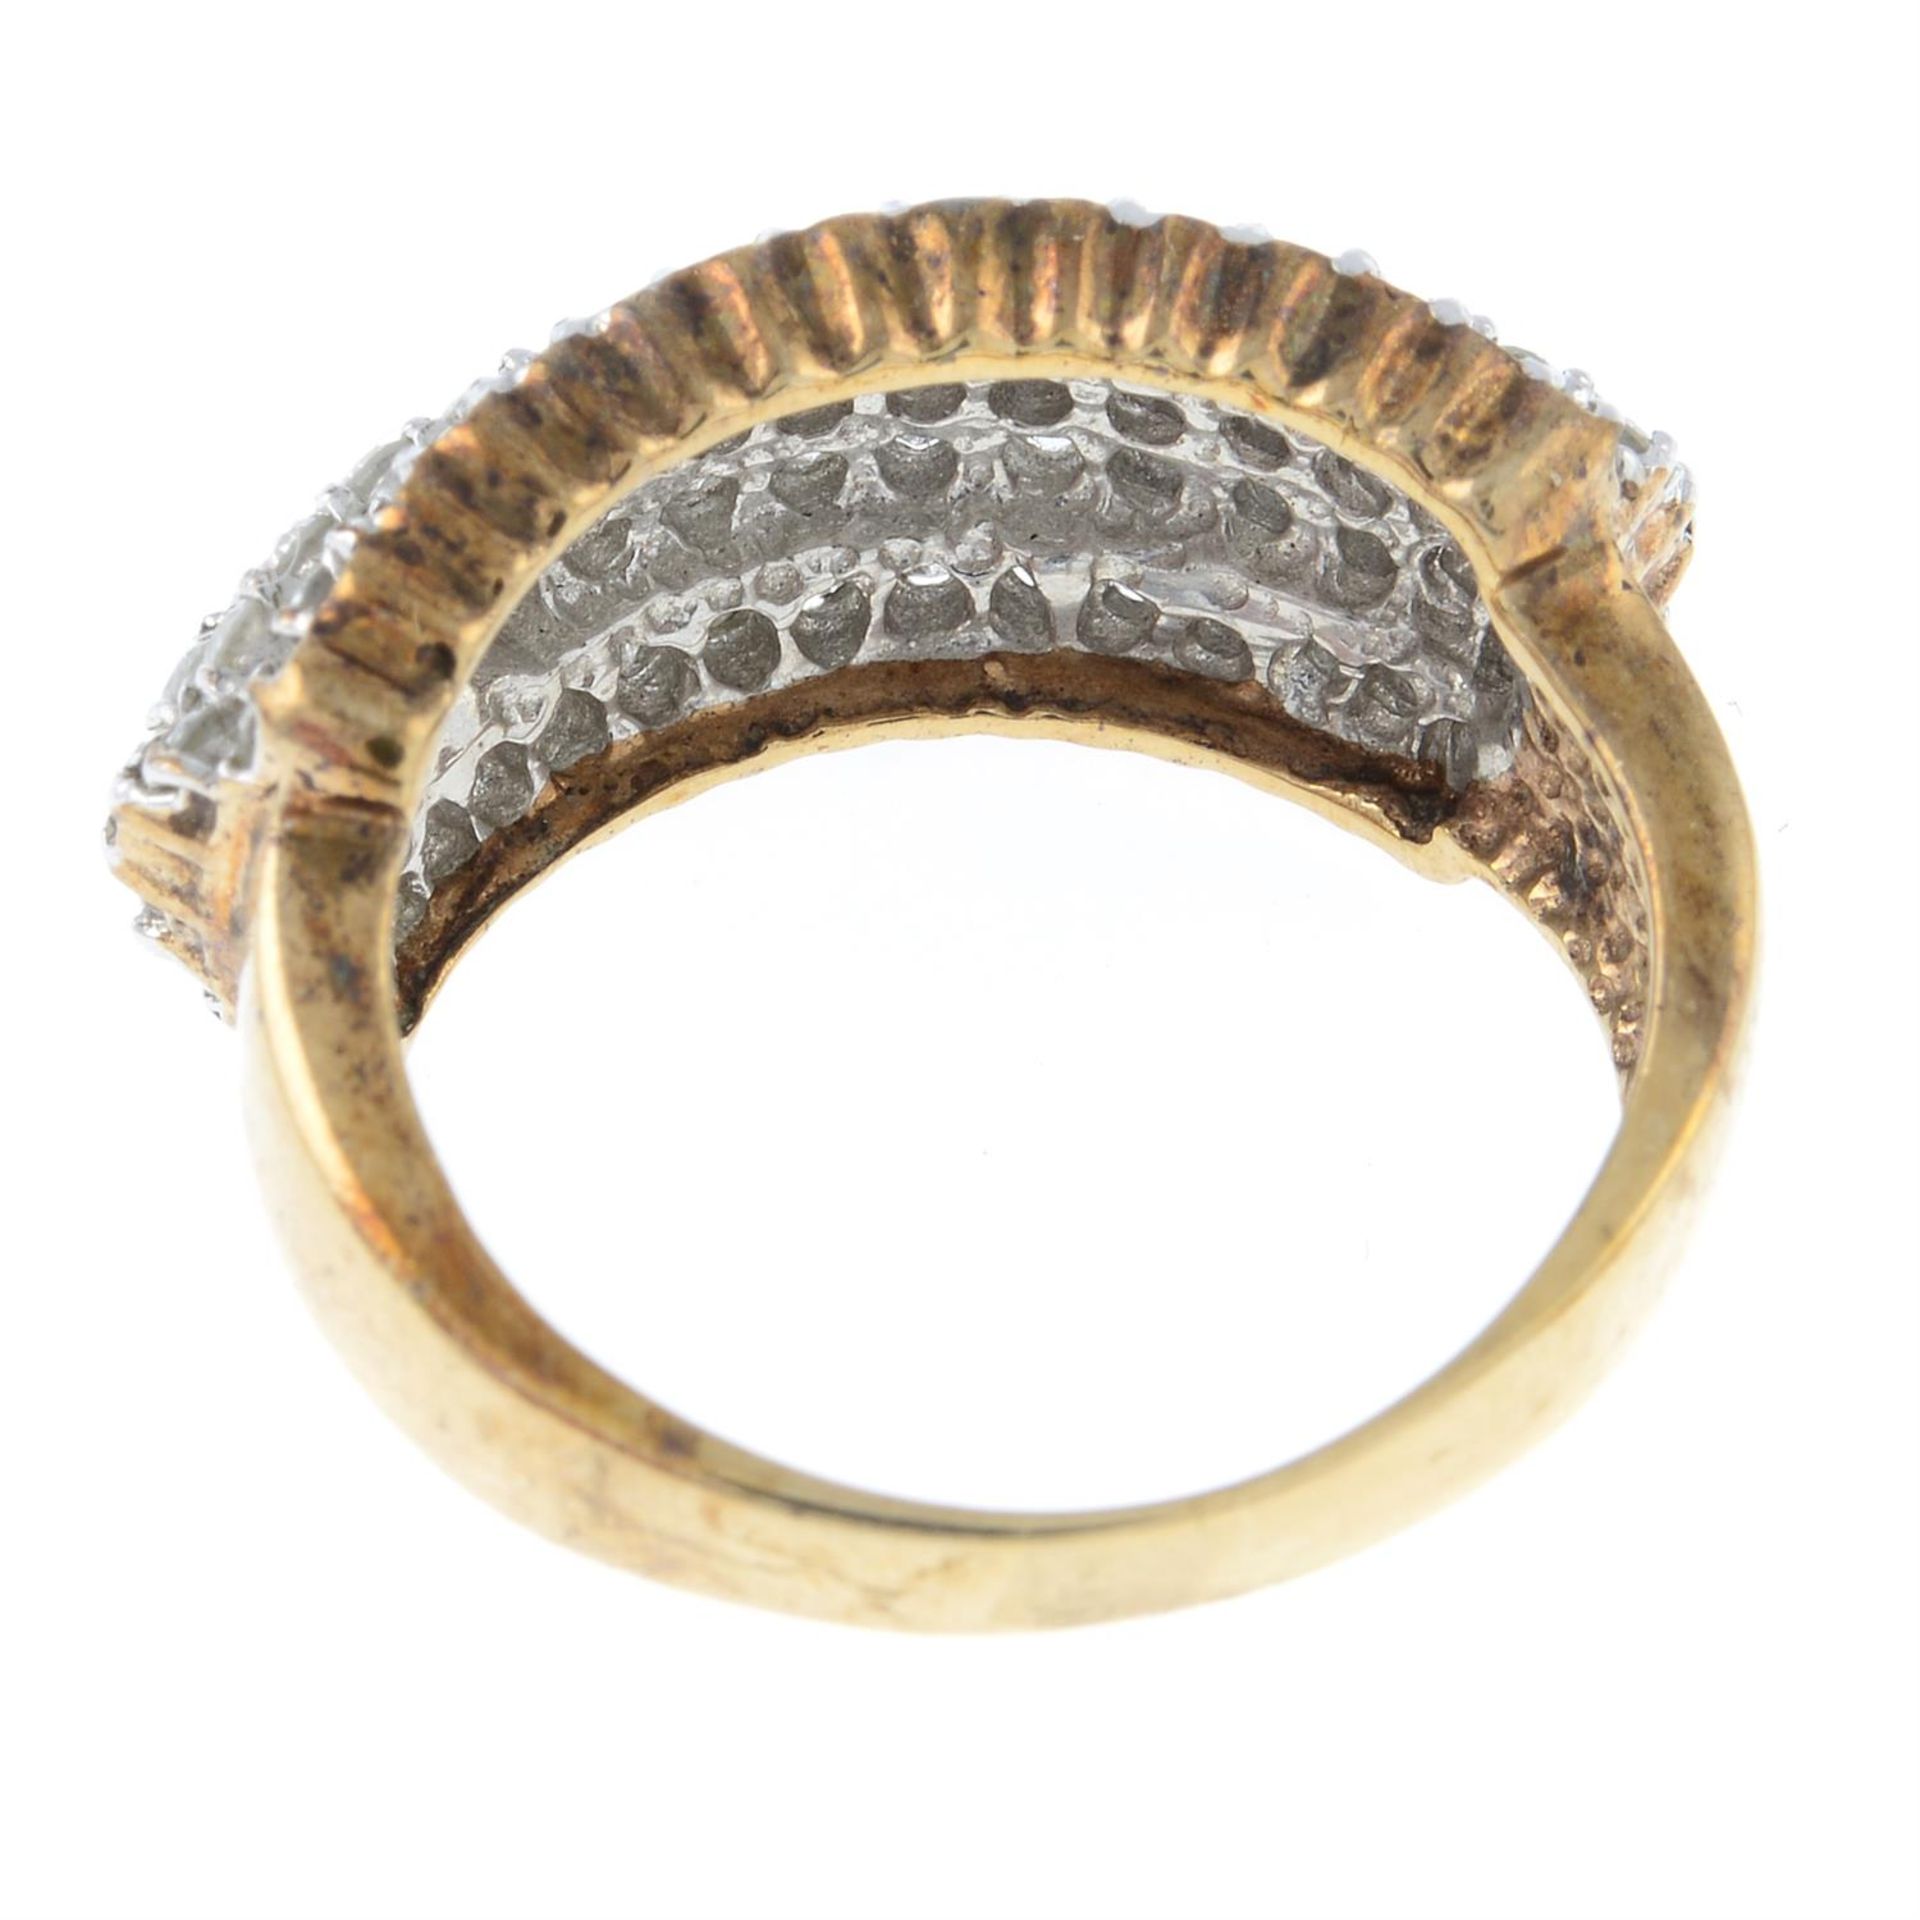 A 9ct gold pavé-set brilliant-cut diamond ring. - Image 2 of 2